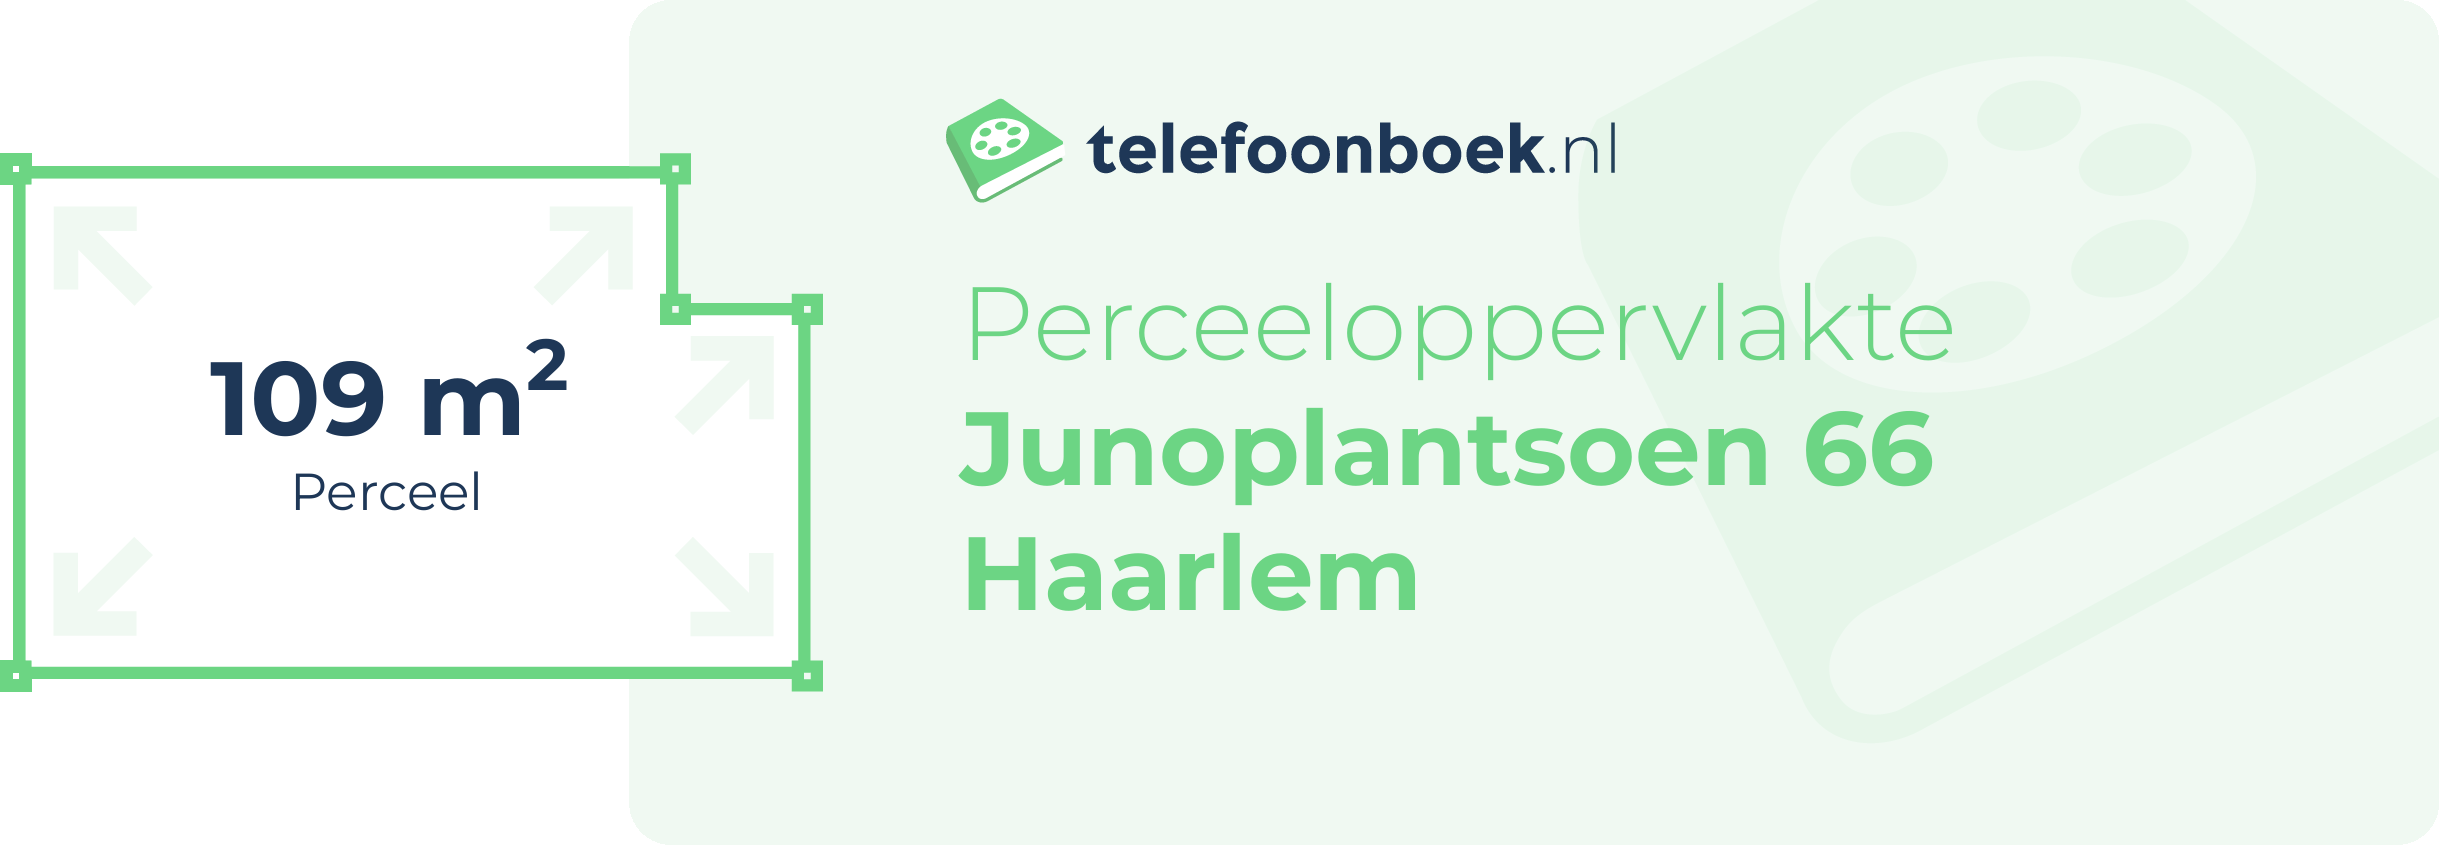 Perceeloppervlakte Junoplantsoen 66 Haarlem